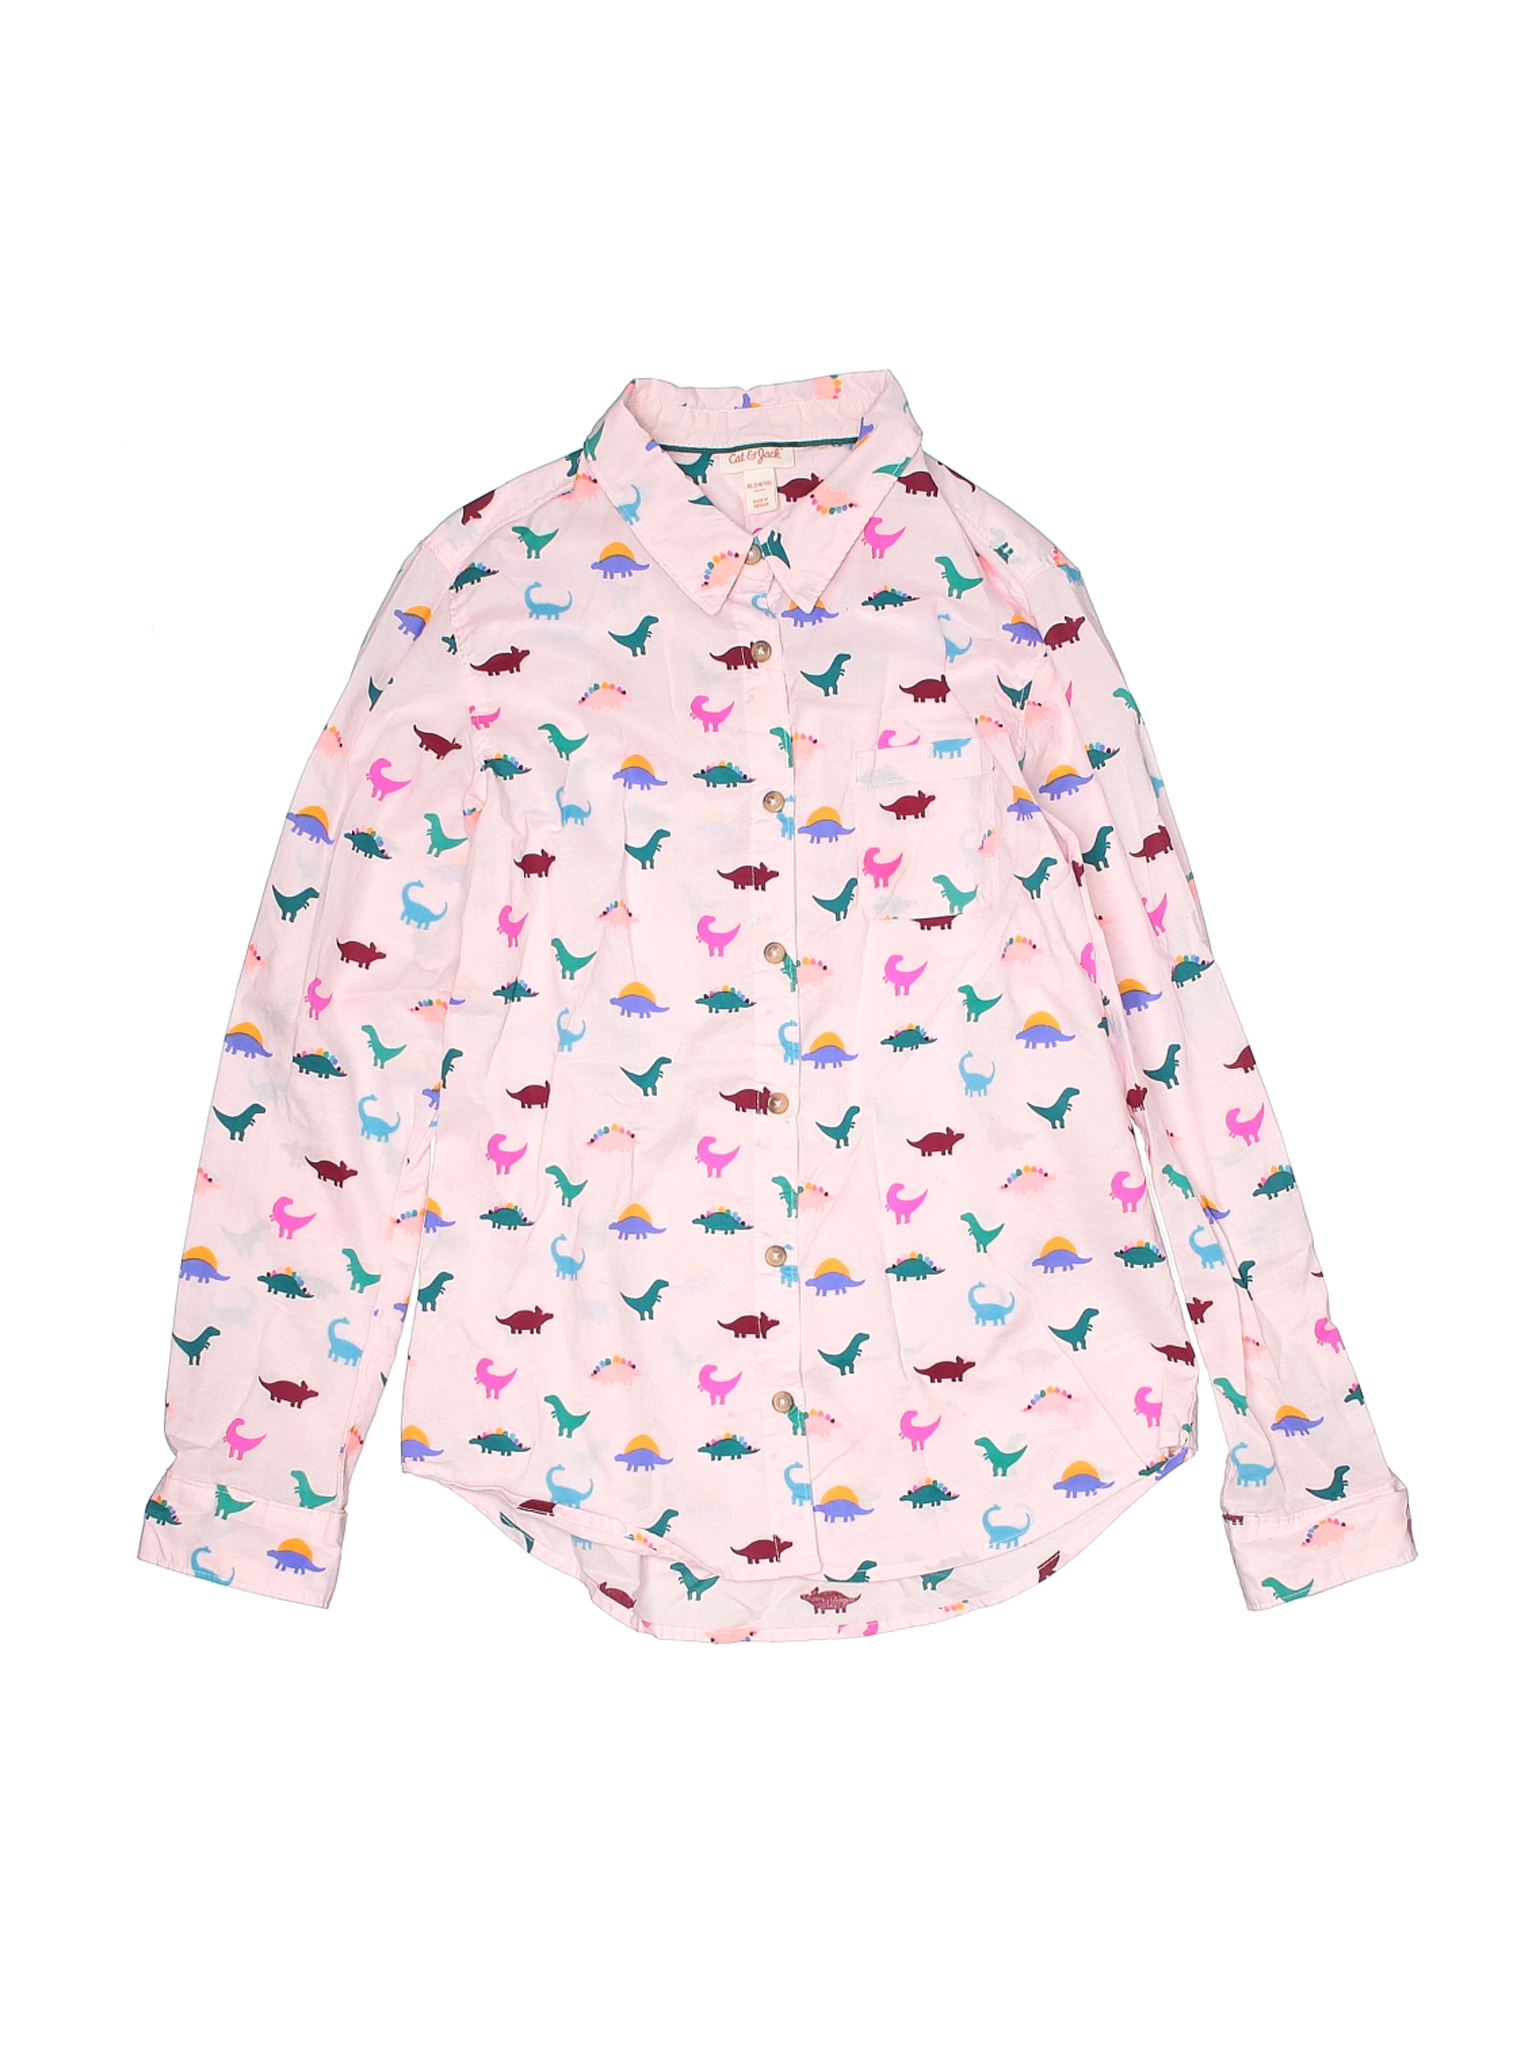 Cat & Jack Girls Pink Long Sleeve Button-Down Shirt XL Youth | eBay